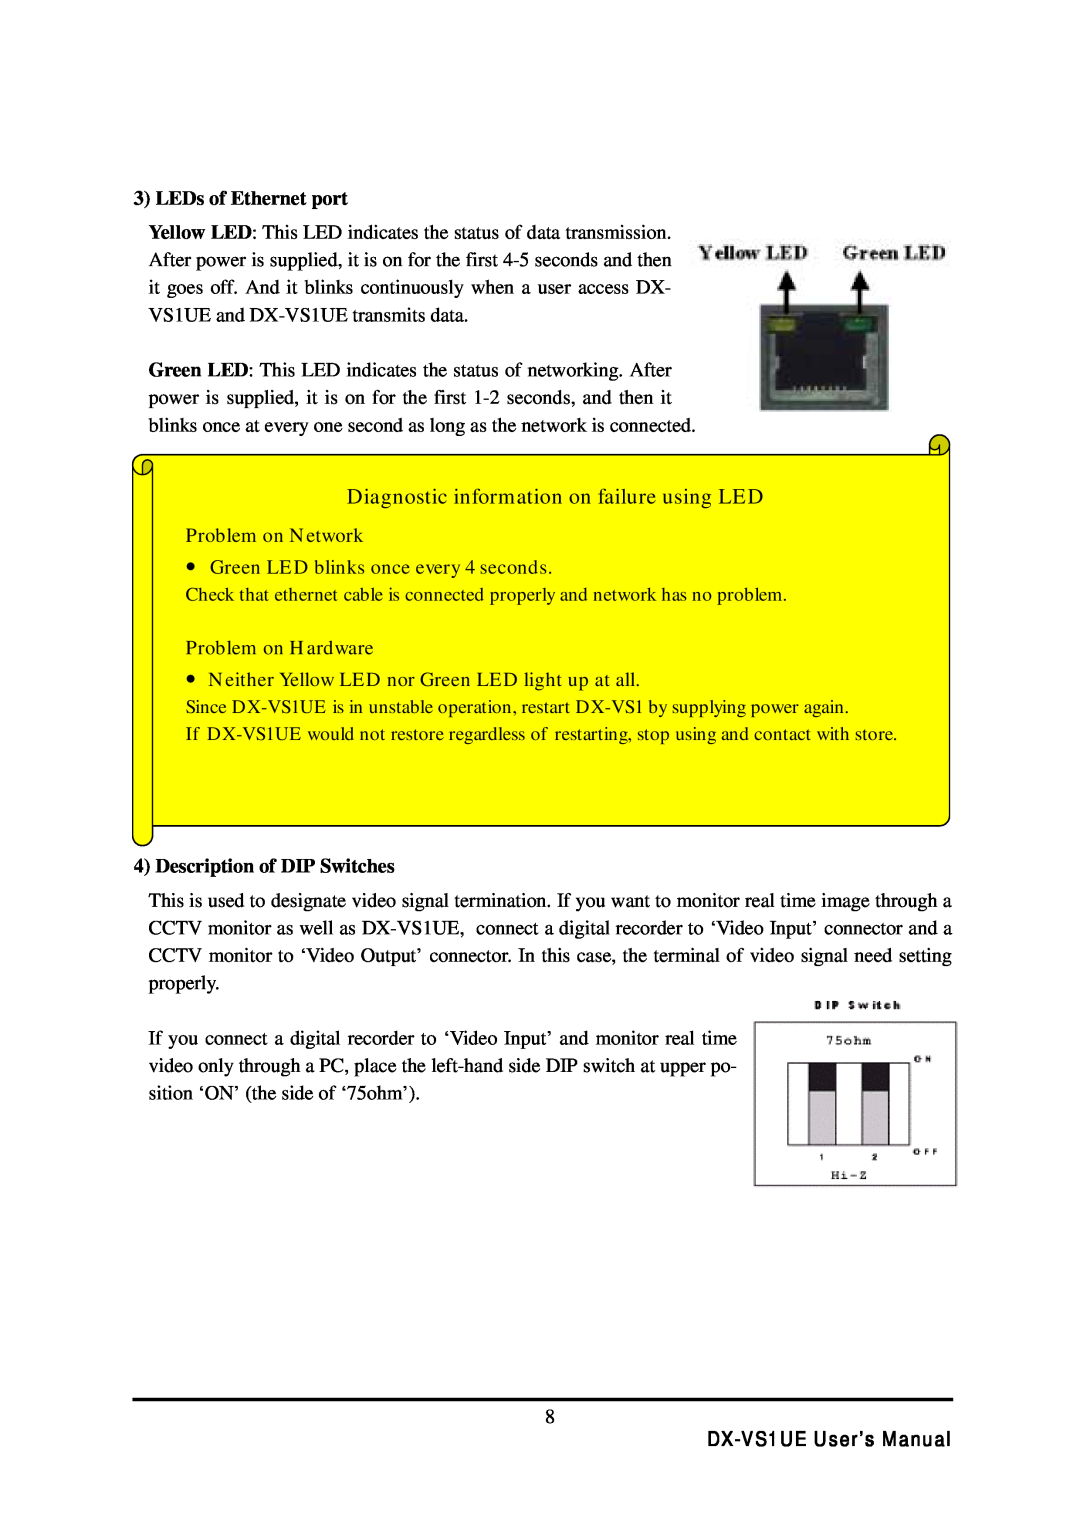 Mitsubishi Electronics Diagnostic information on failure using LED, LEDs of Ethernet port, DX-VS1UE User’s Manual 